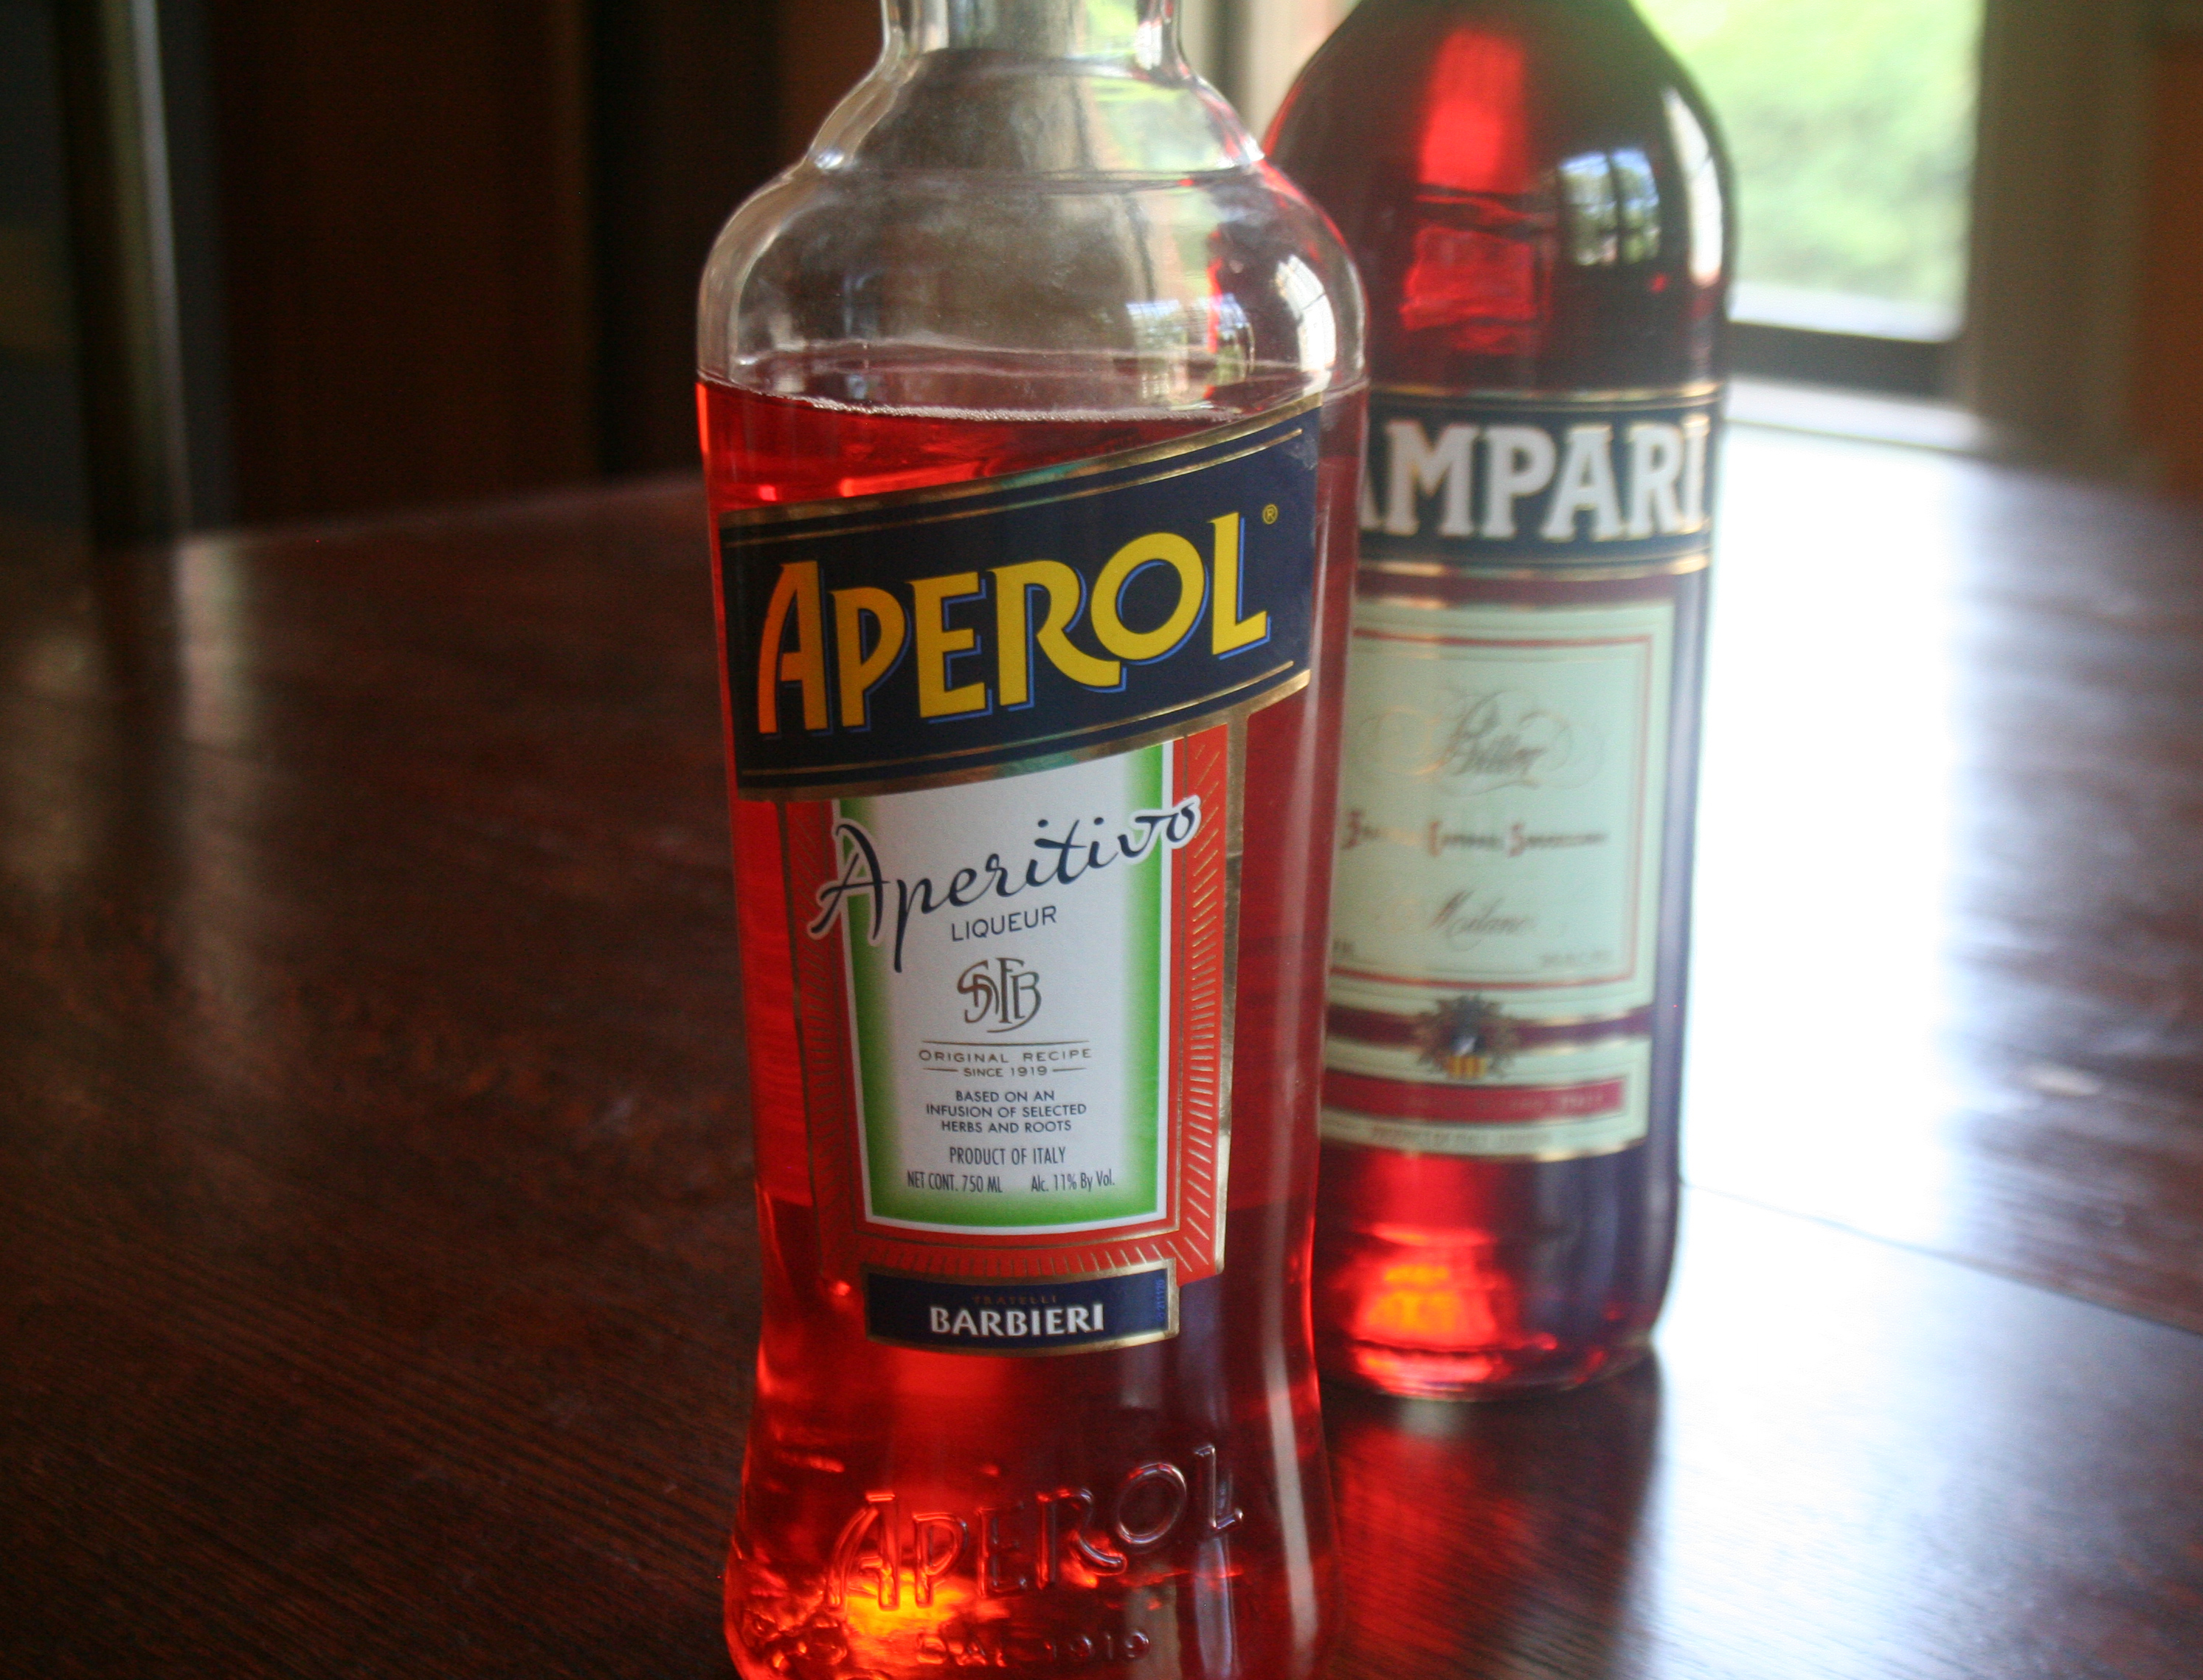 Aperitvo liqueurs from Italy - Aperol and Campari